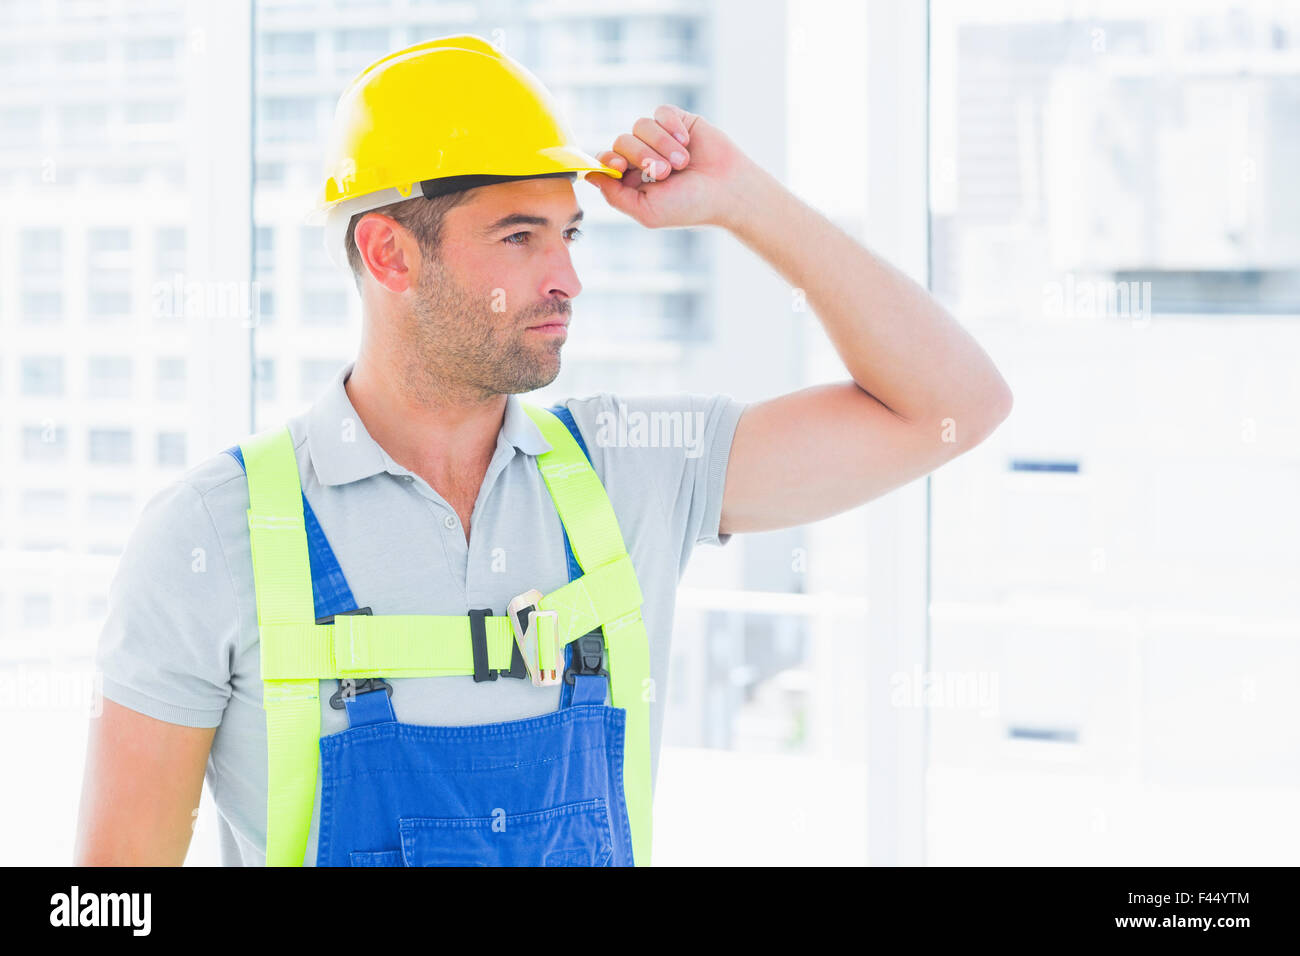 Manual worker wearing yellow hard hat Stock Photo